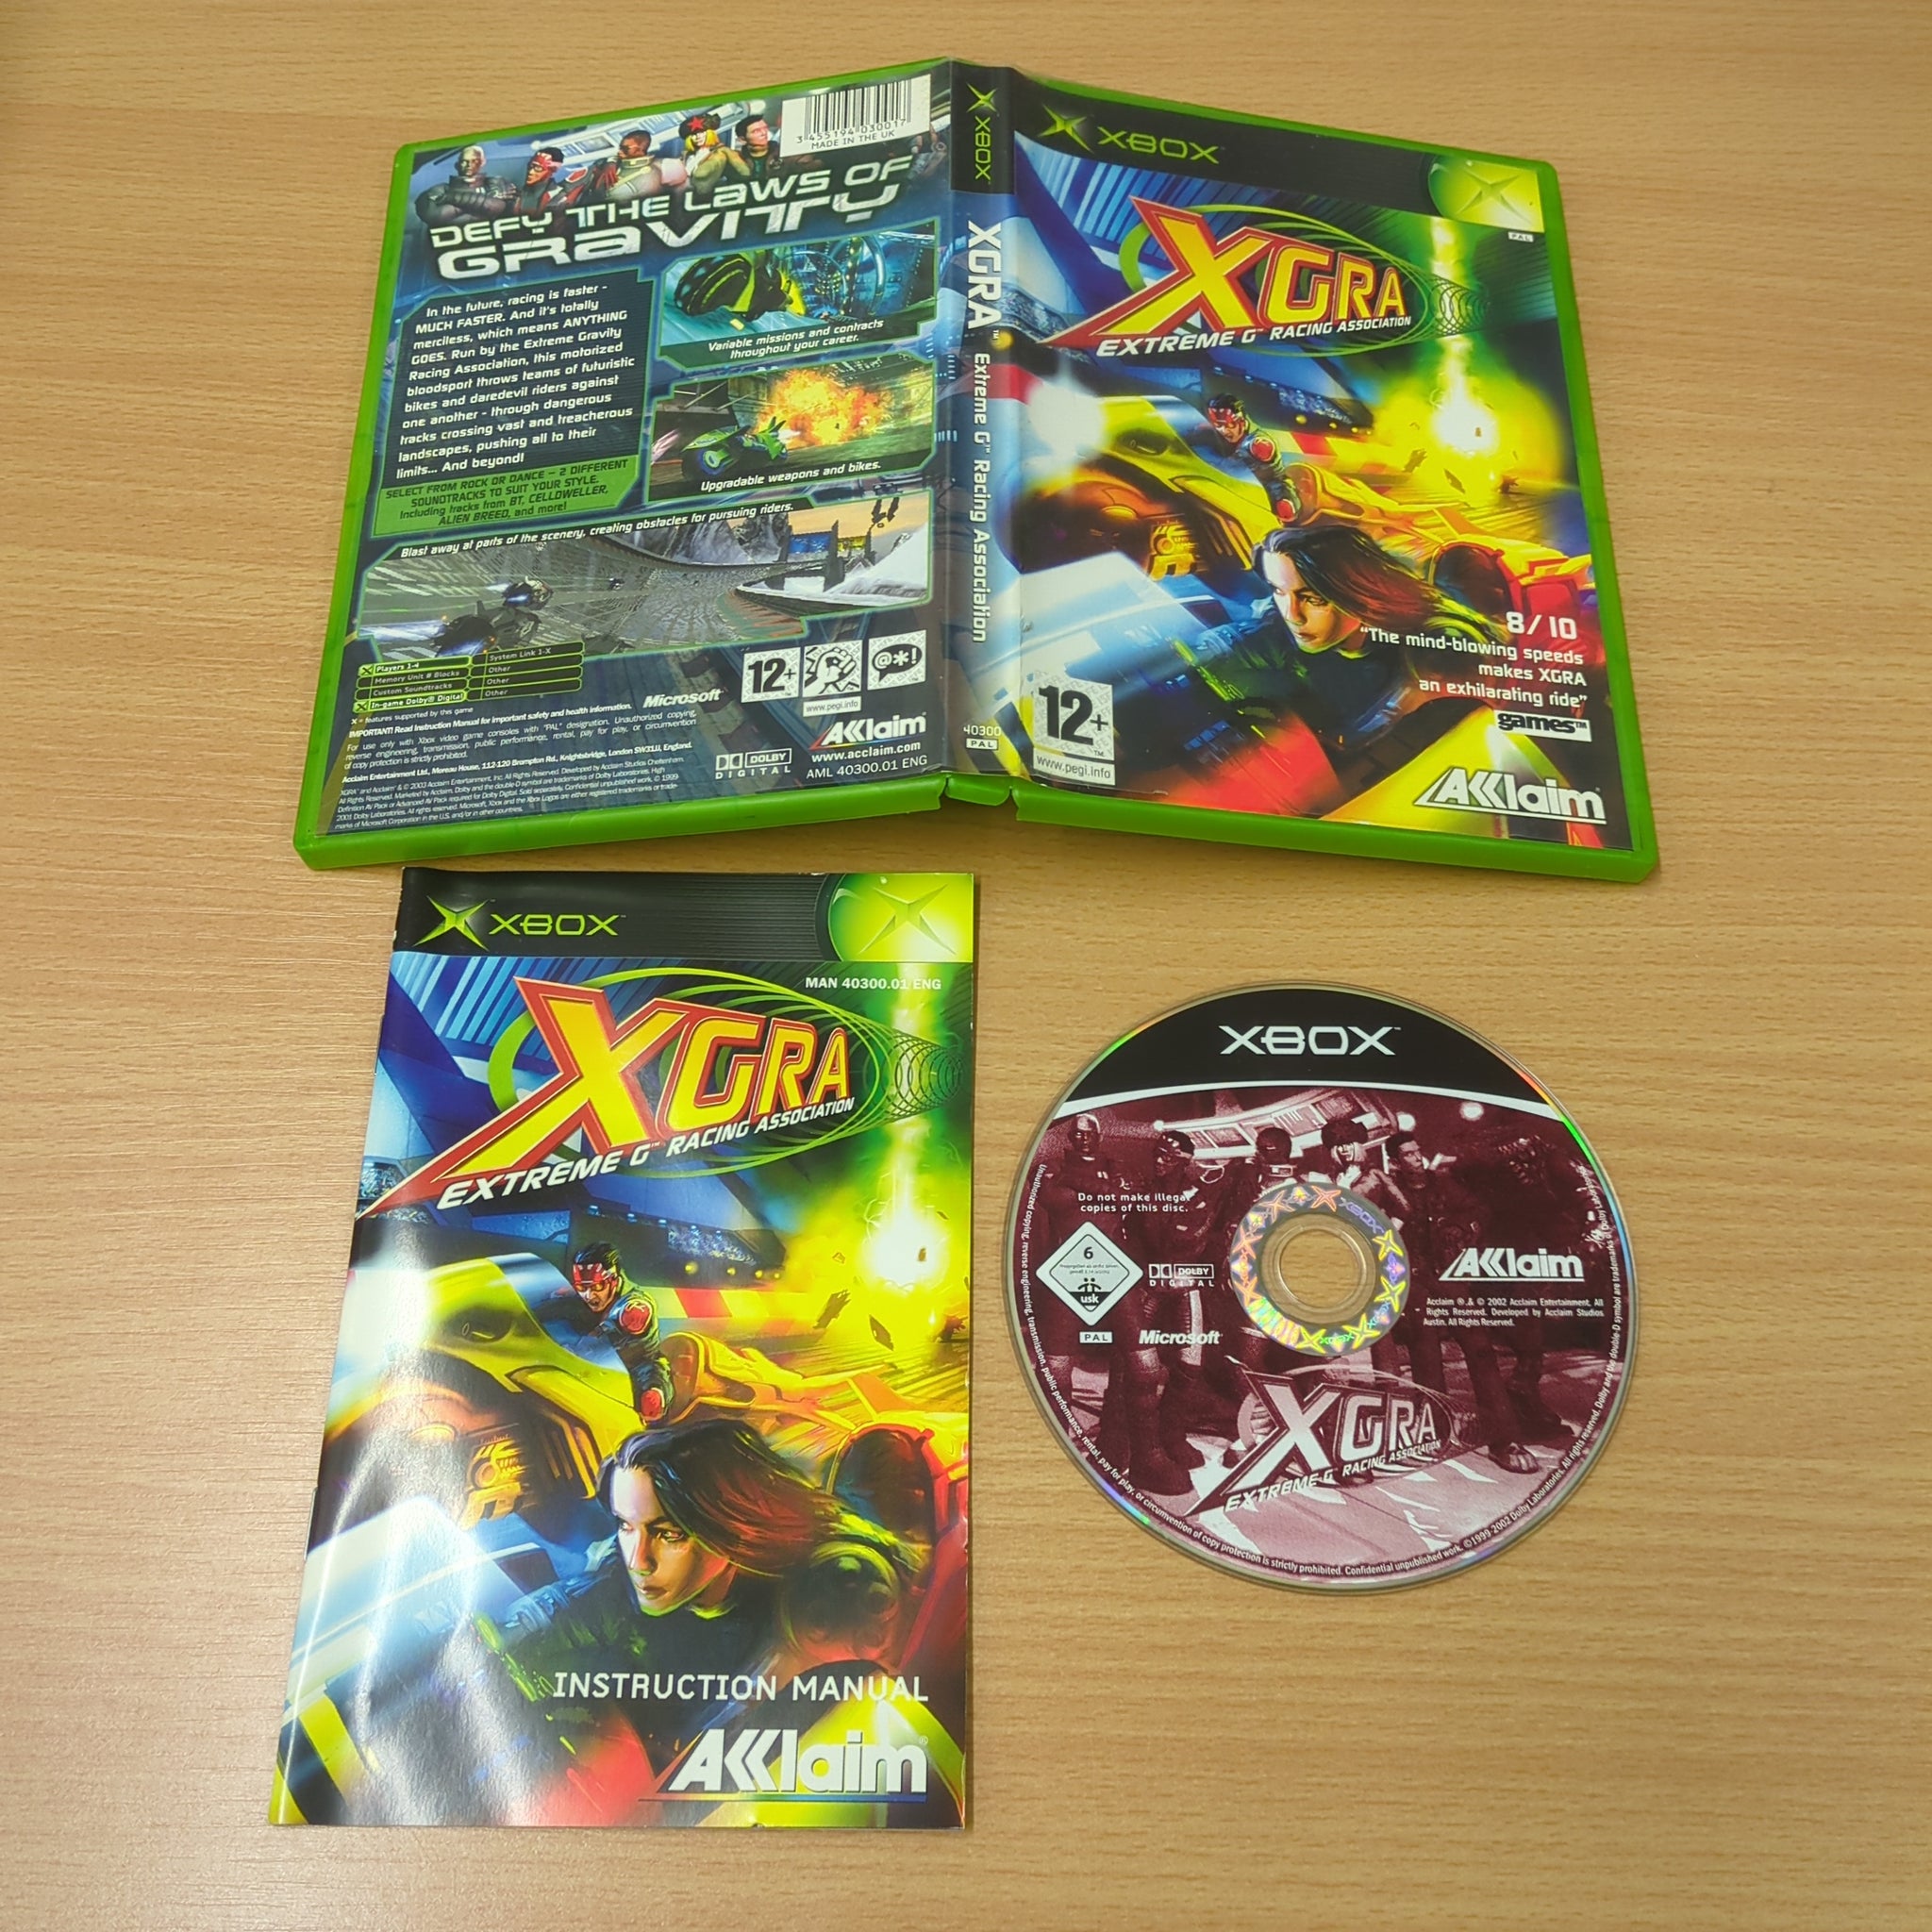 XGRA: Extreme G Racing Association original Xbox game